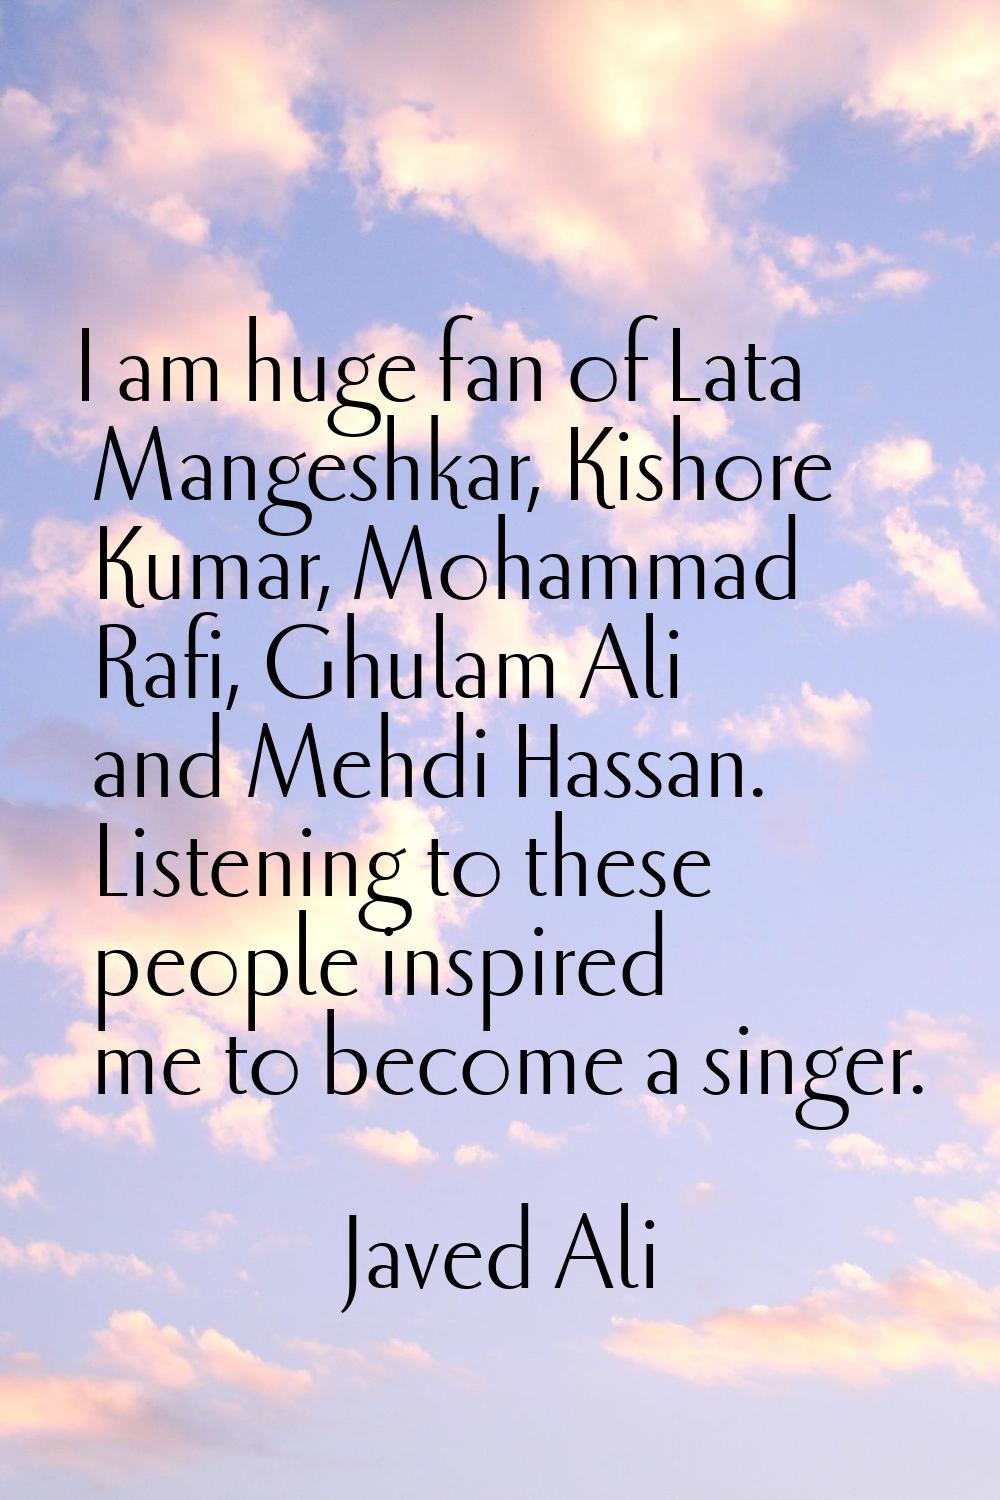 I am huge fan of Lata Mangeshkar, Kishore Kumar, Mohammad Rafi, Ghulam Ali and Mehdi Hassan. Listen